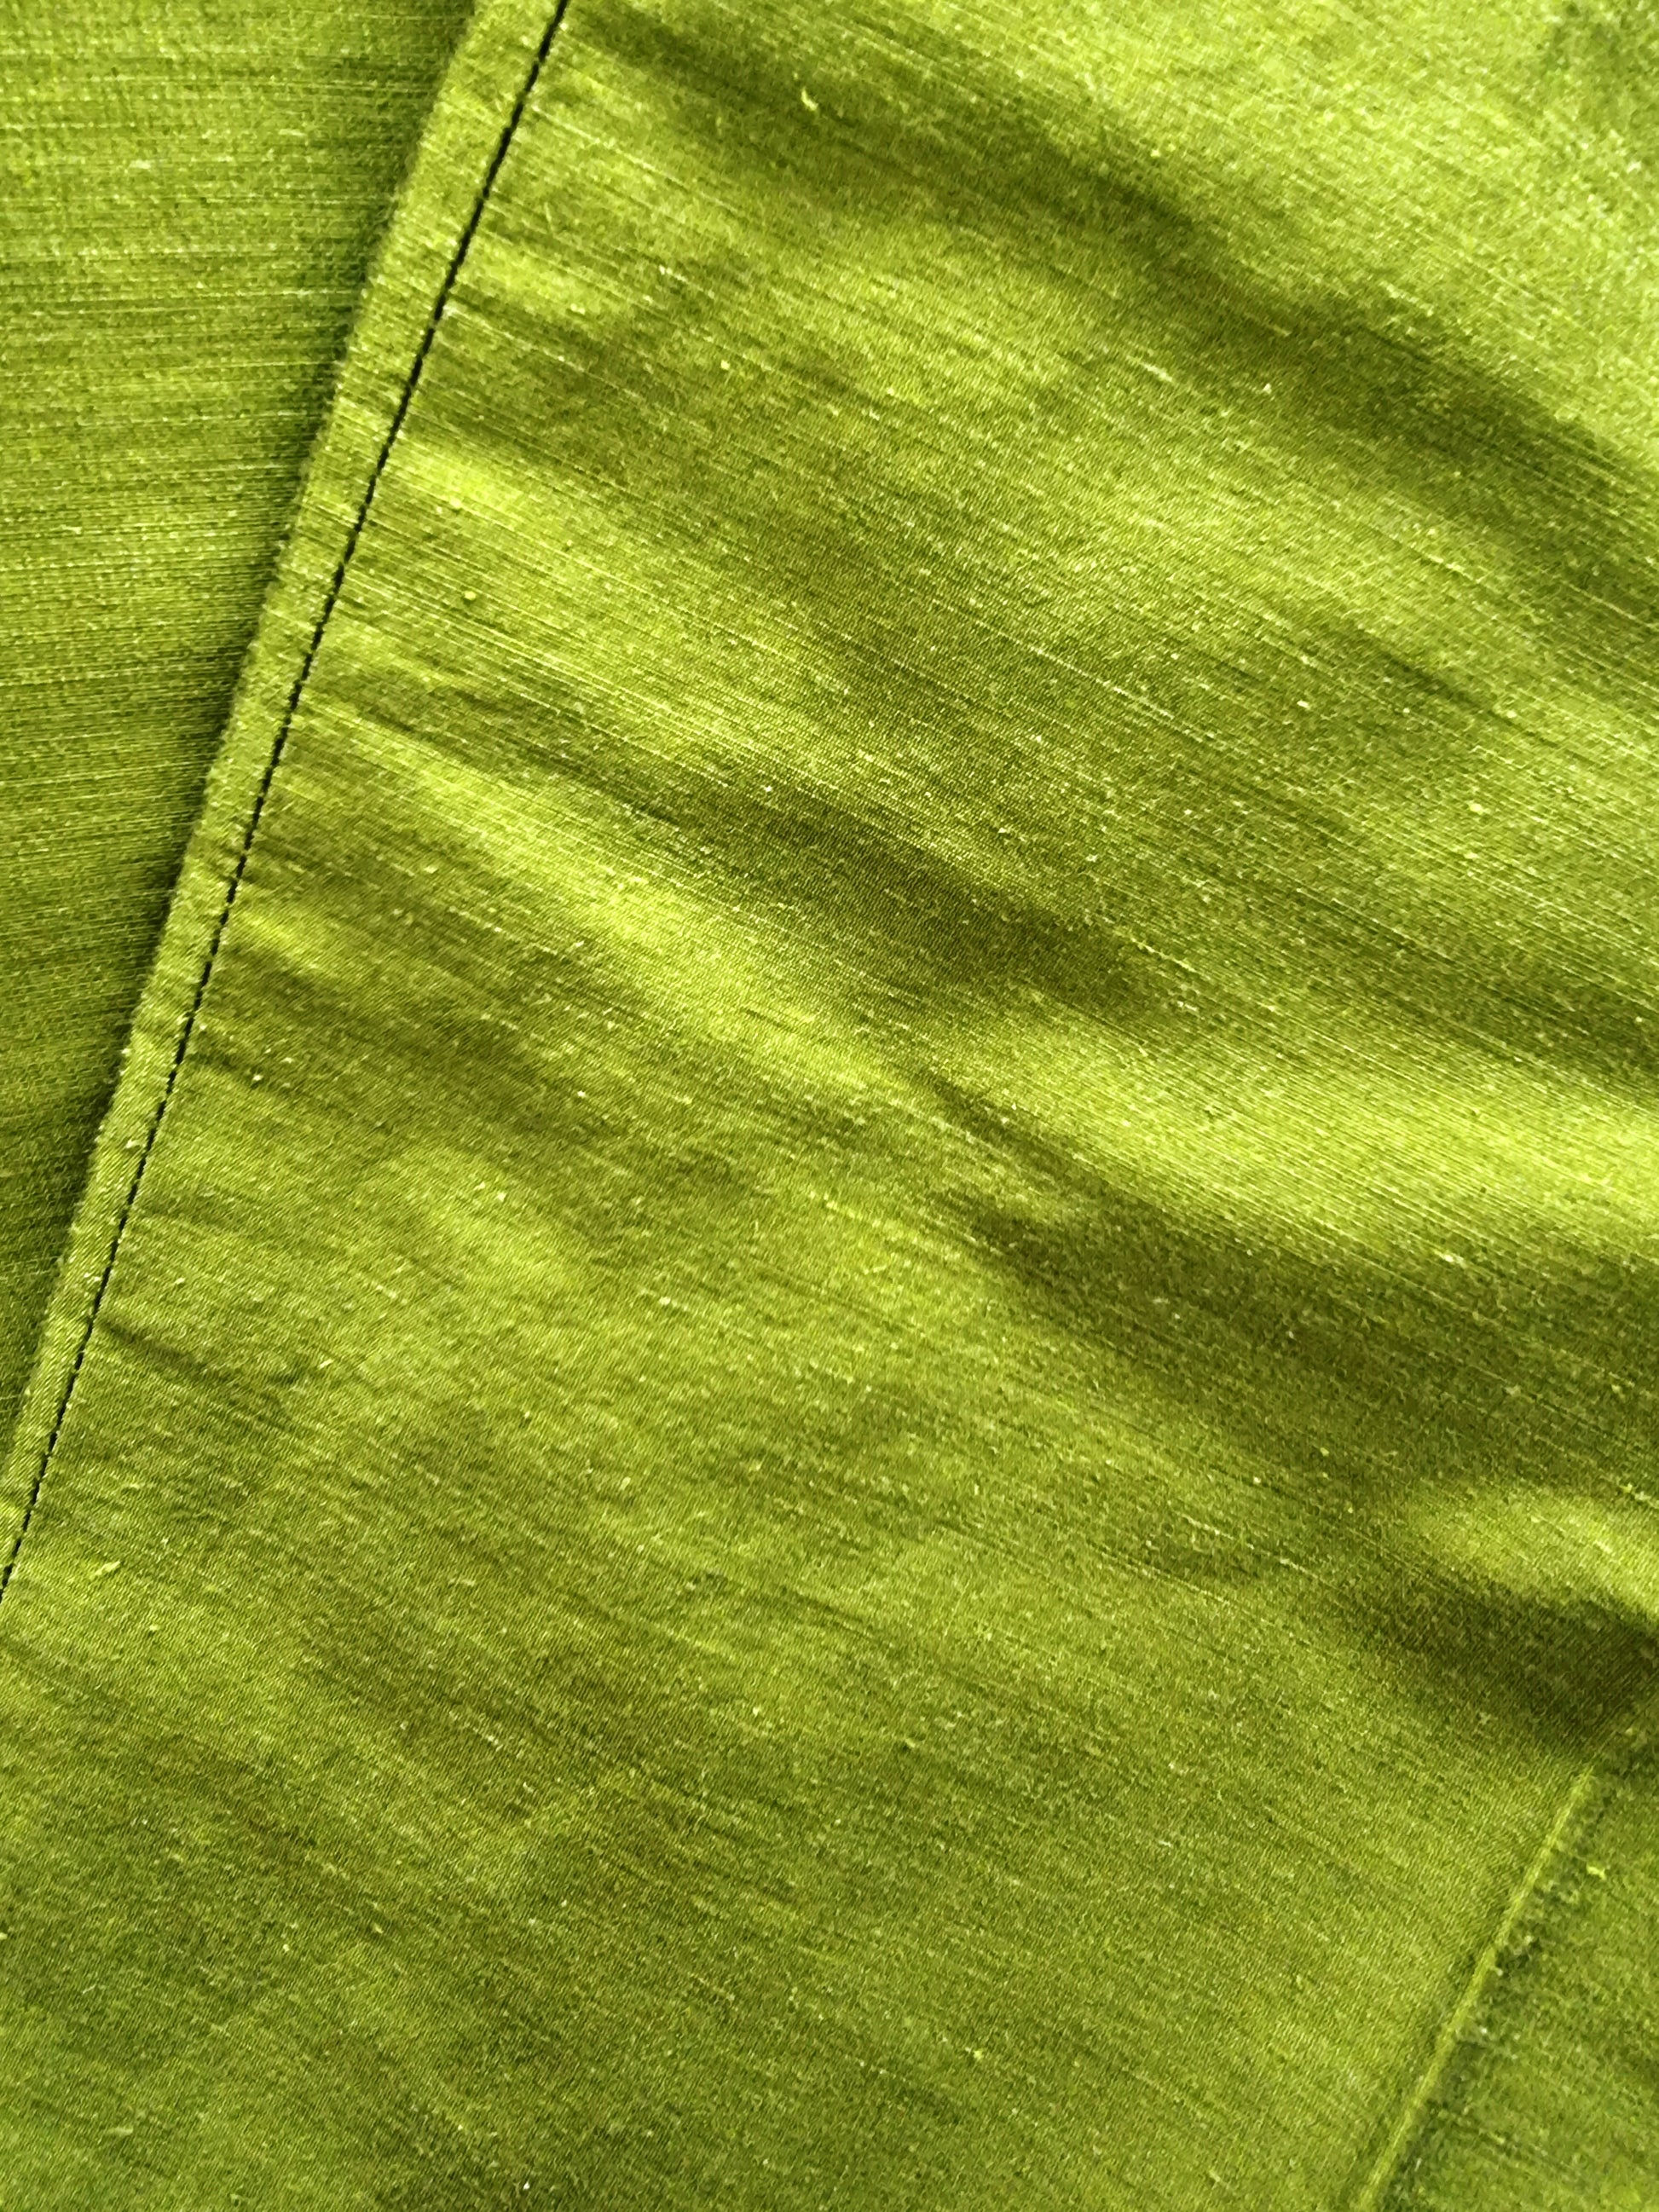 Monsoon Olive Green Women’s Slim Fit Trousers. UK 12 US 8 EU 40 Timeless Fashions